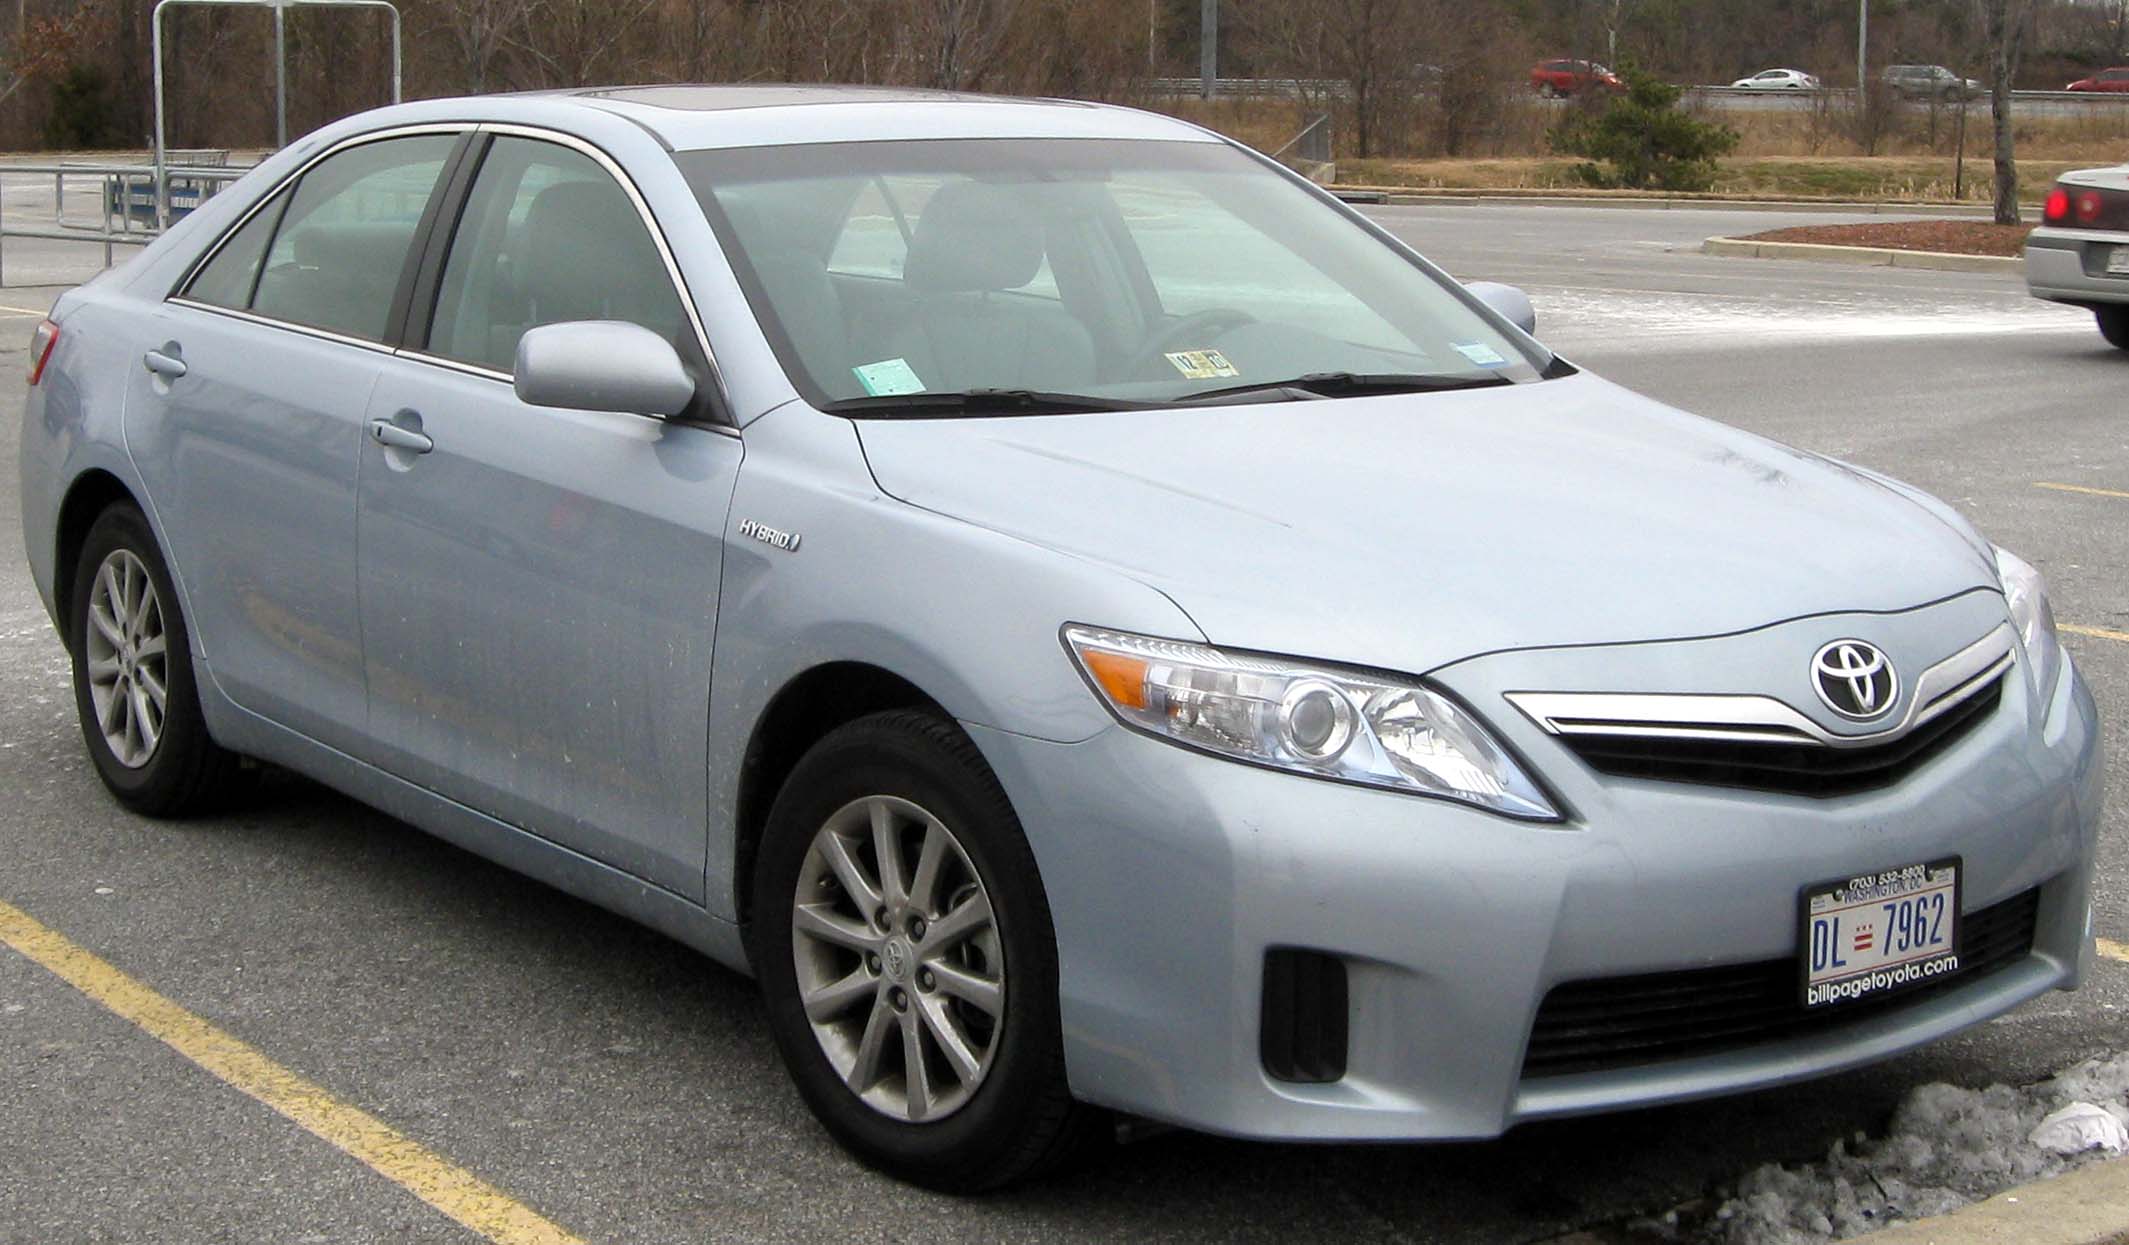 File:2010-2011 Toyota Camry Hybrid -- 01-17-2011.jpg - Wikimedia Commons